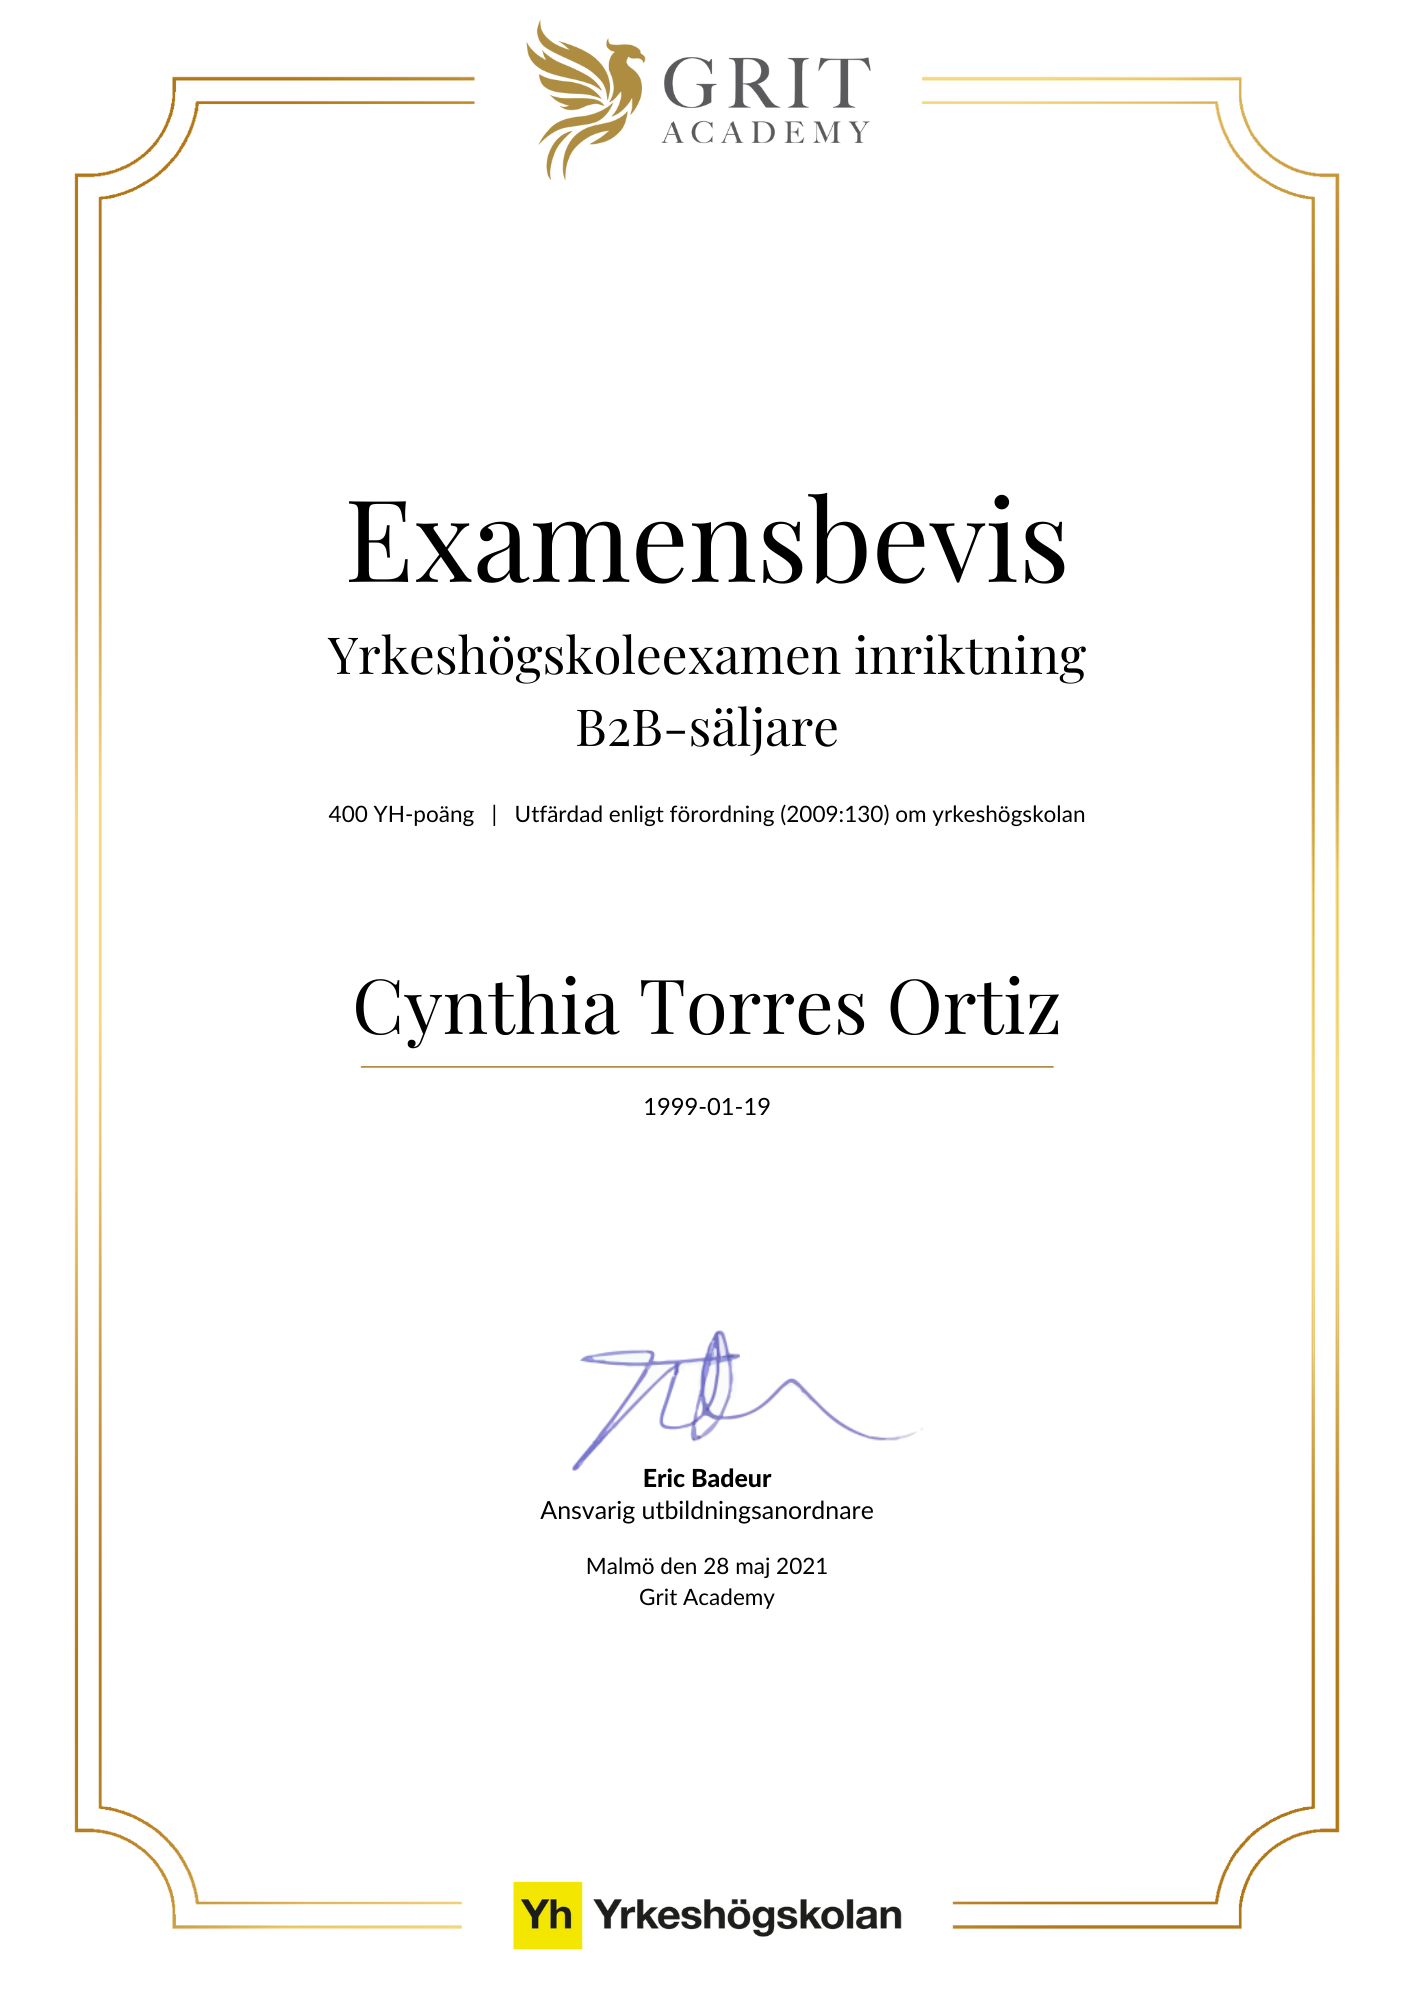 Examensbevis Cynthia Torres Ortiz - 1